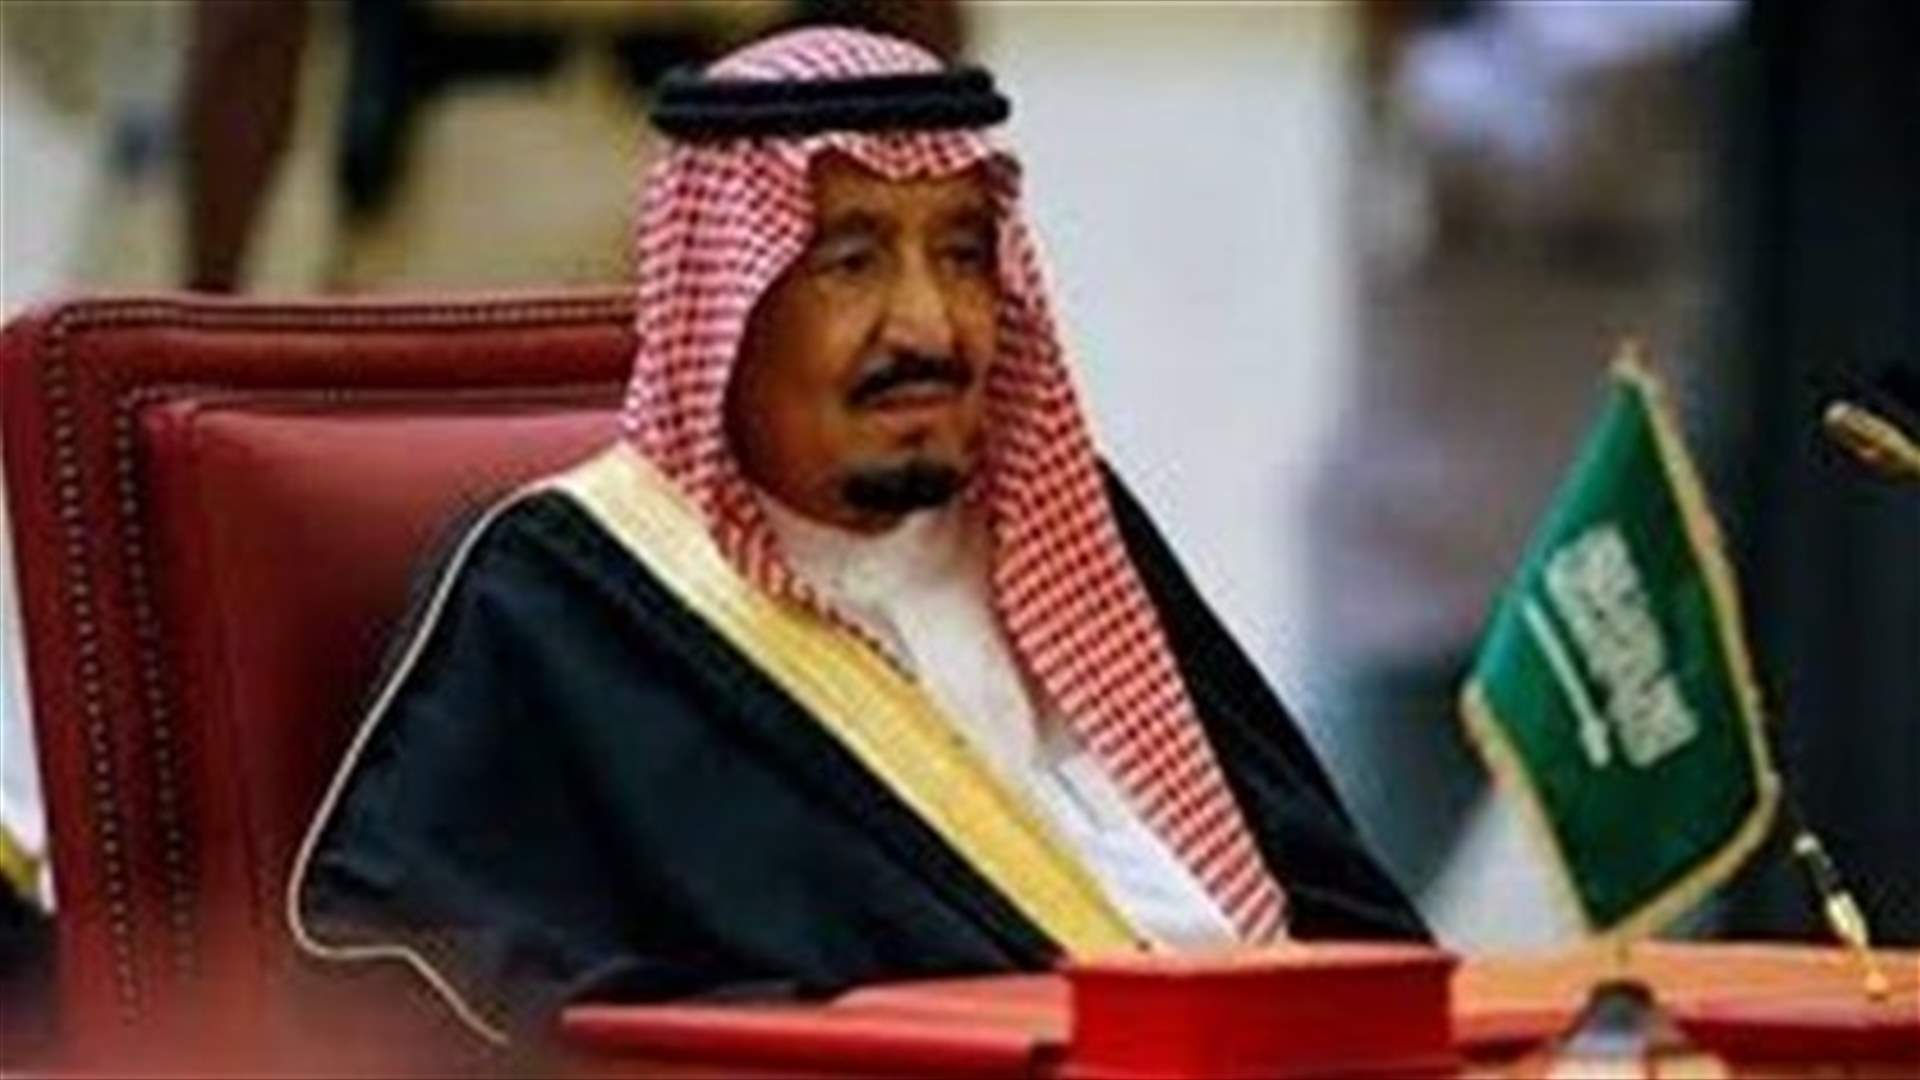 Saudi king orders $2.4 bln coronavirus support for citizens - state news agency